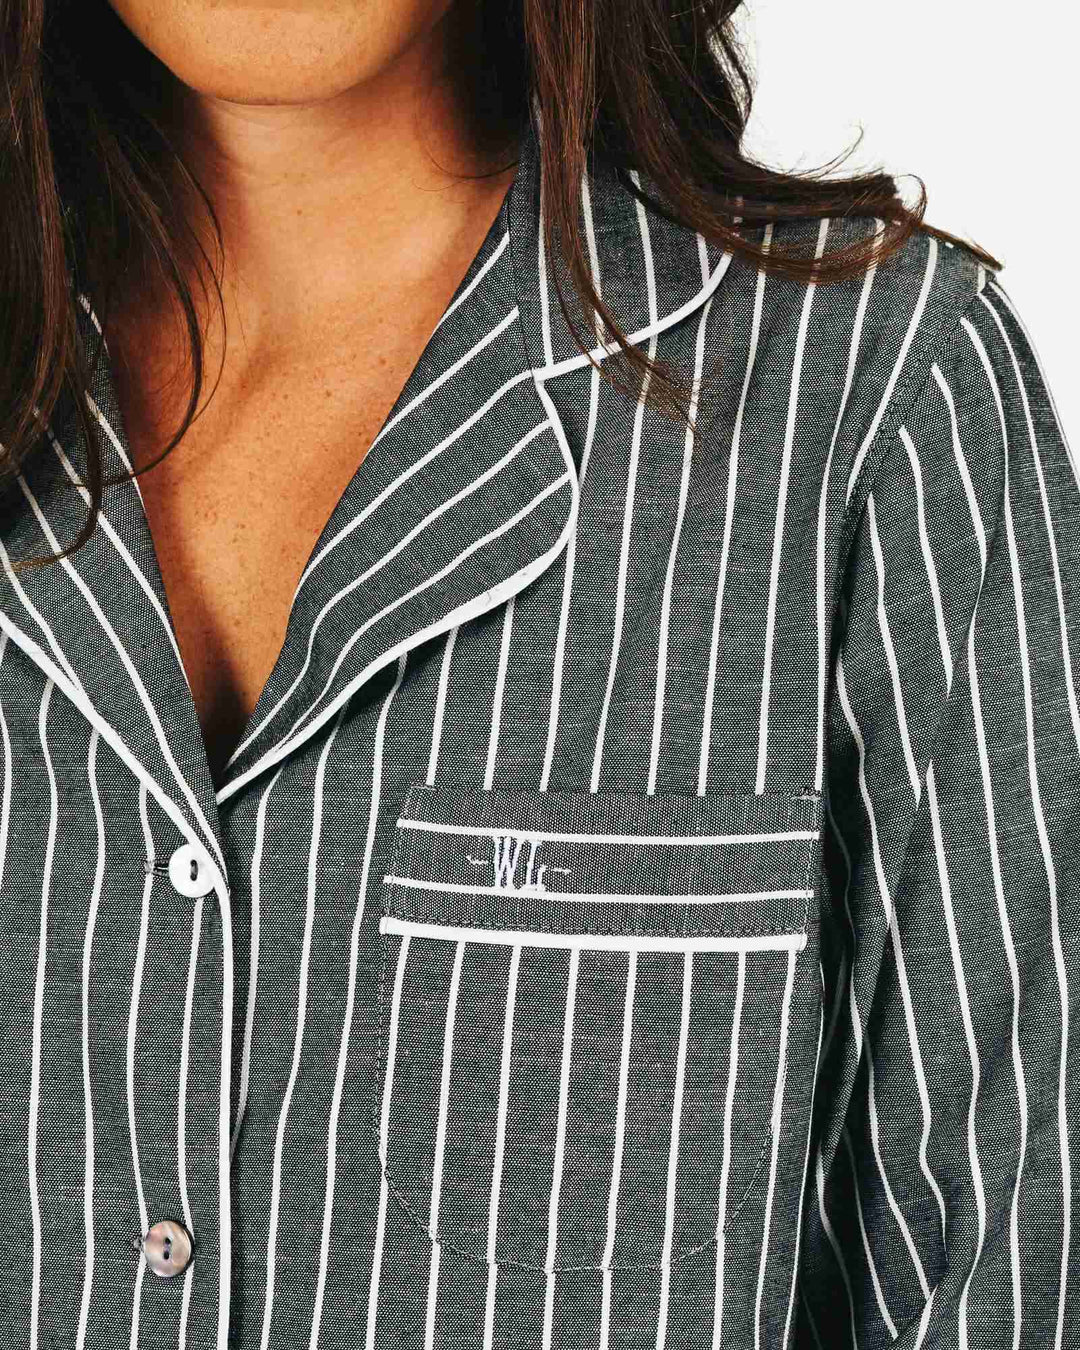 Womens sleepshirt - chambray black stripe pattern